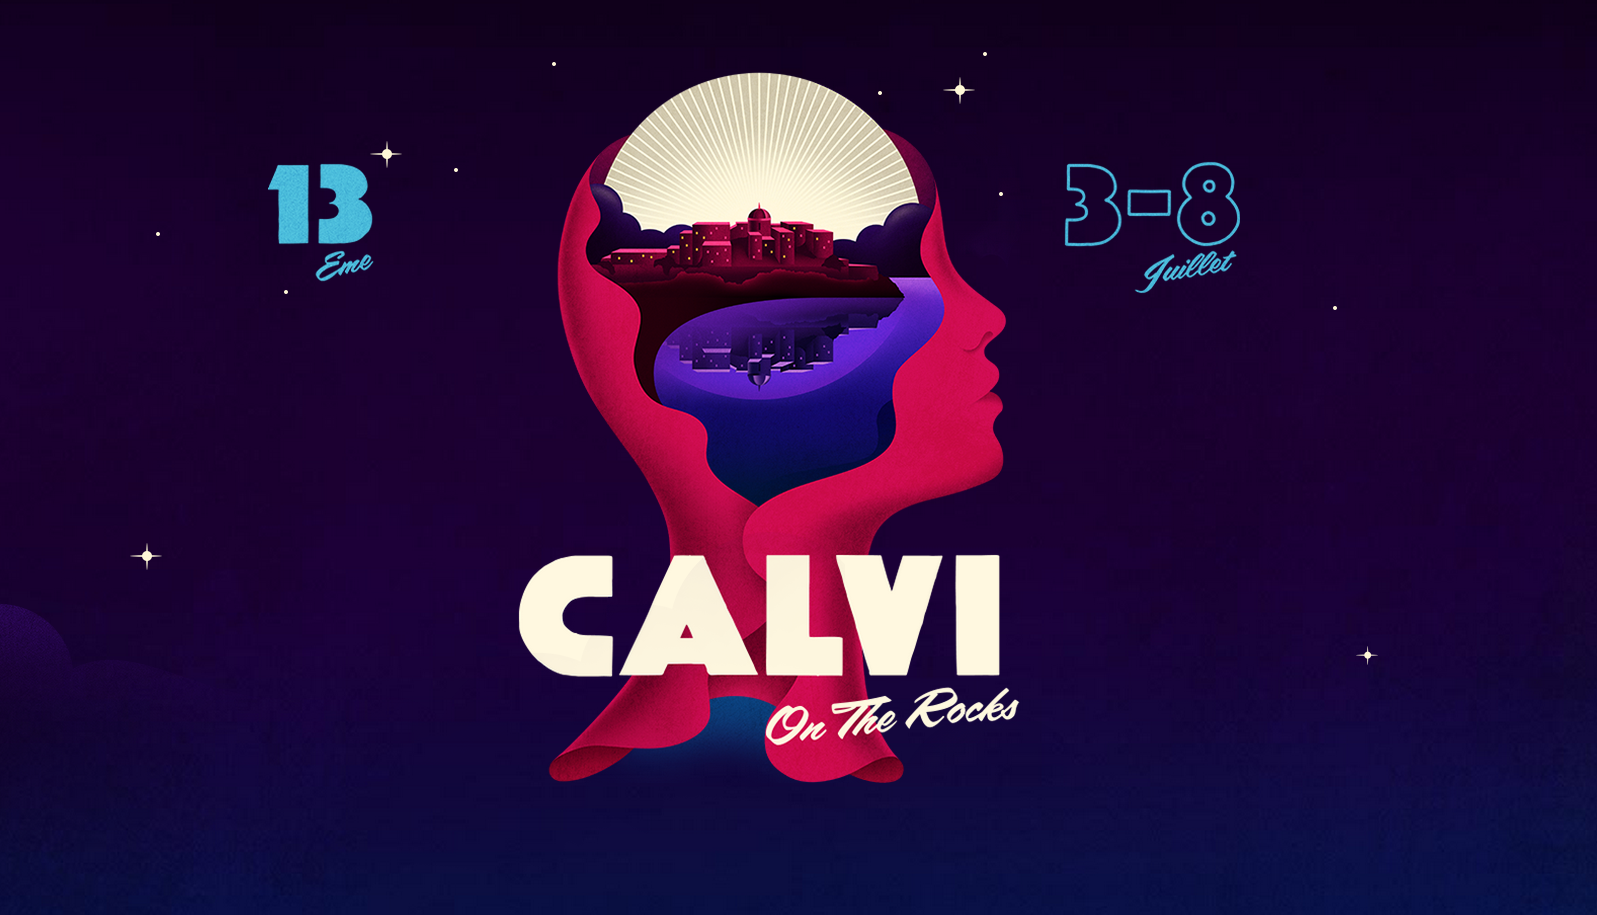 Calvi on the rocks 2015...le programme